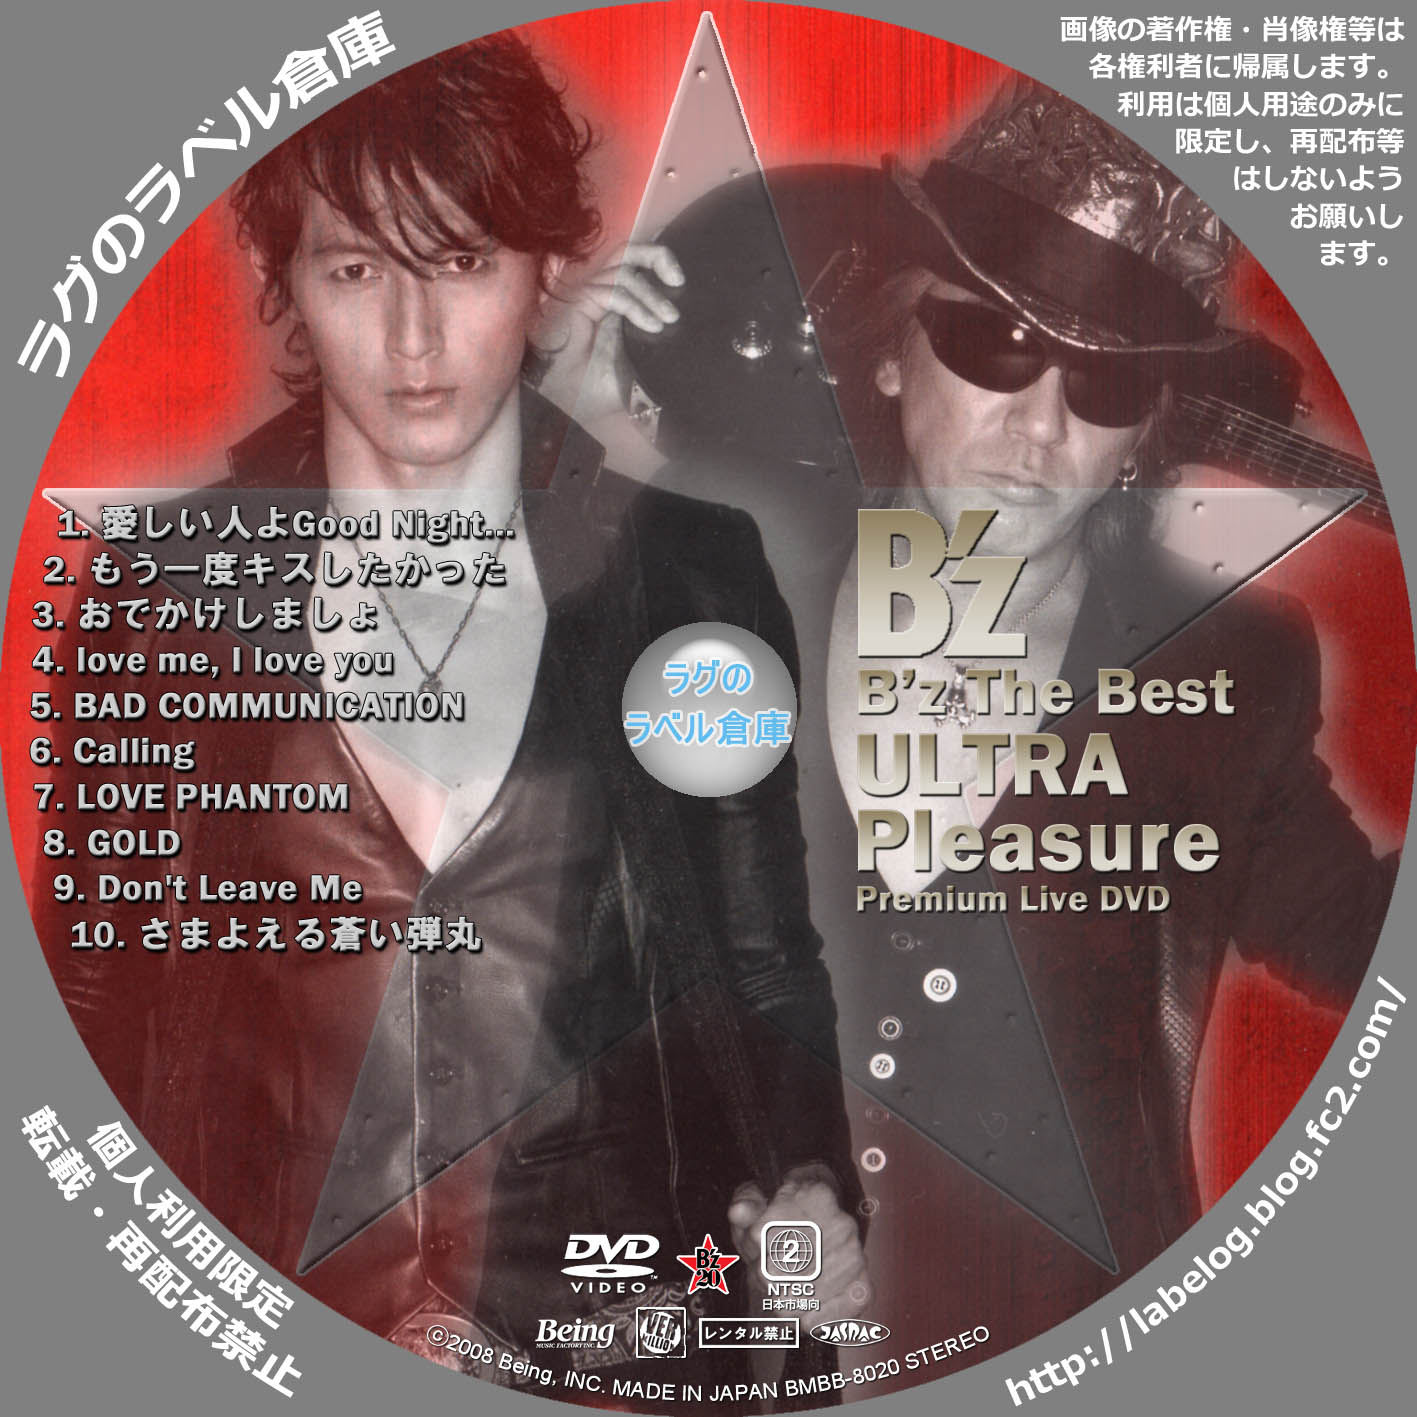 B'z The Best “ULTRA Pleasure” ラグの CD / DVD / BD 自作ラベル倉庫